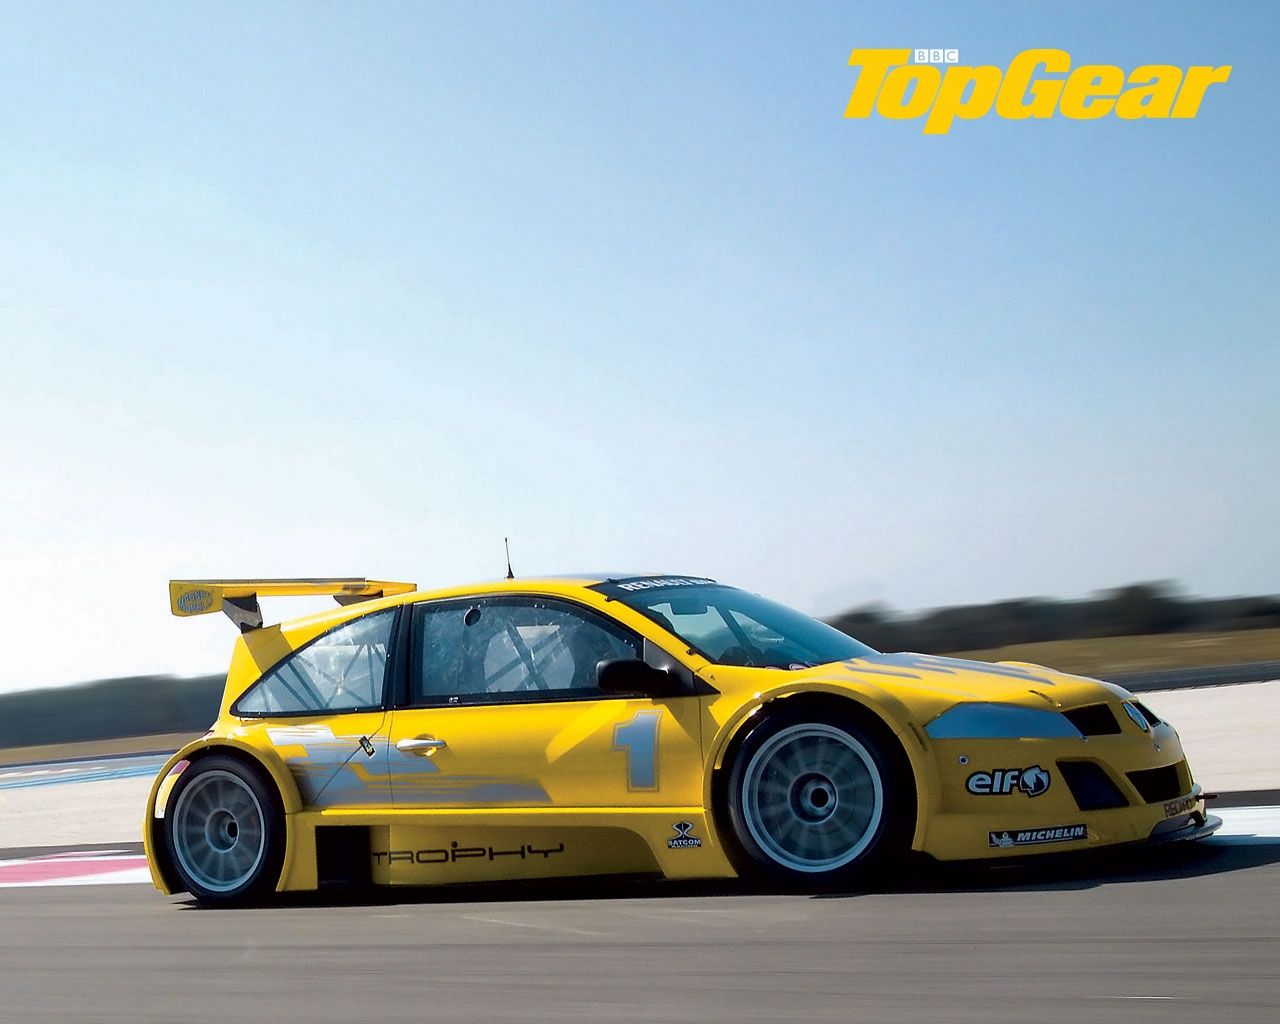 Top Gear yellow car wallpaper. Top Gear yellow car